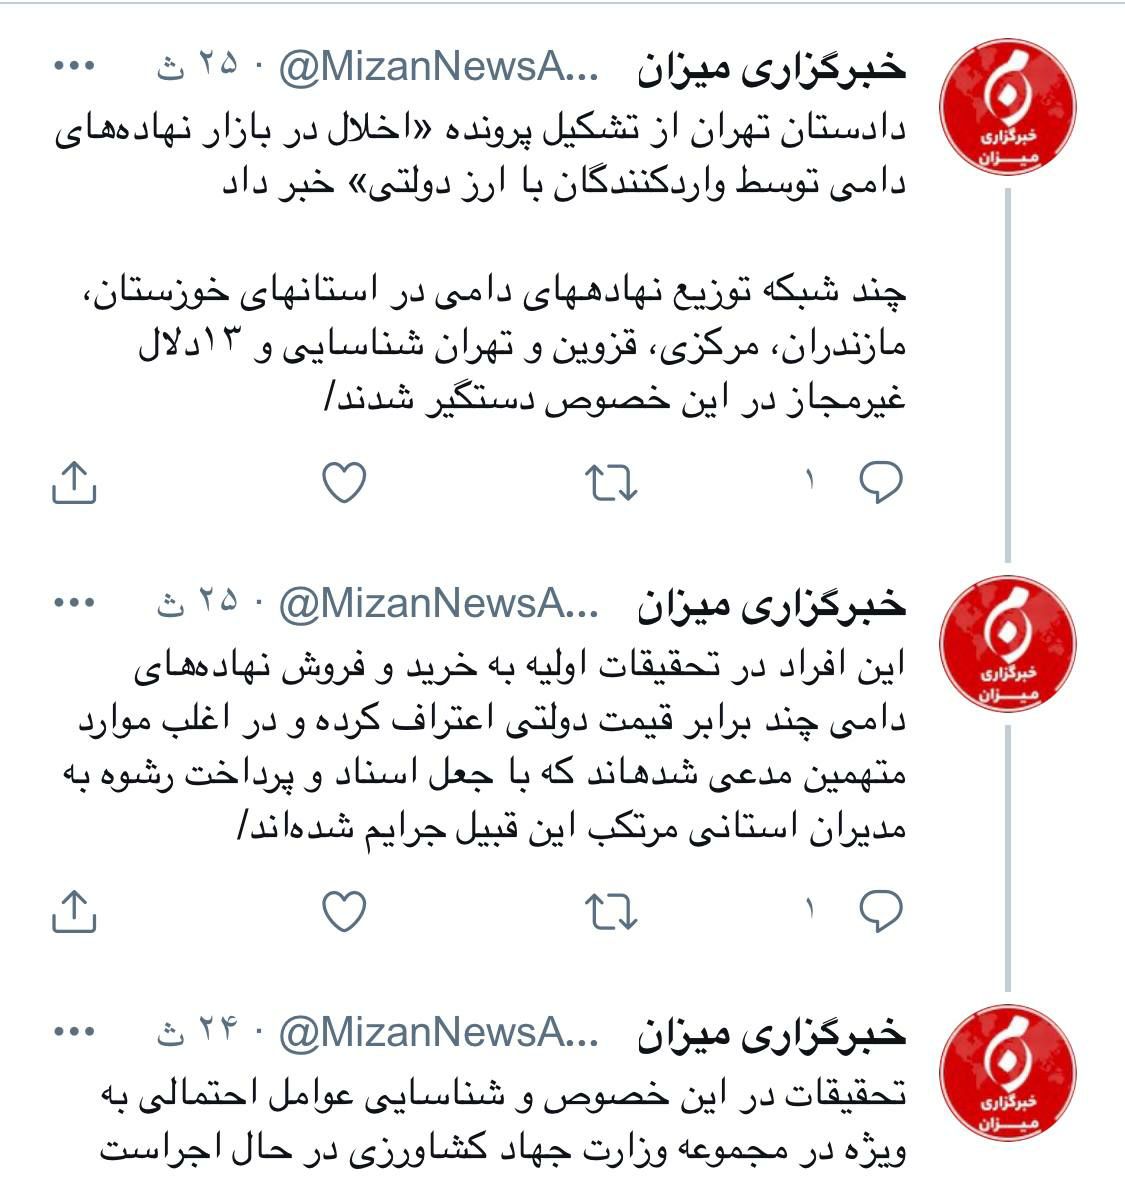 ️دادستان تهران از تشکیل پرونده «اخلال در بازار نهاده‌های دامی توسط واردکنندگان با ارز دولتی» خبر داد.